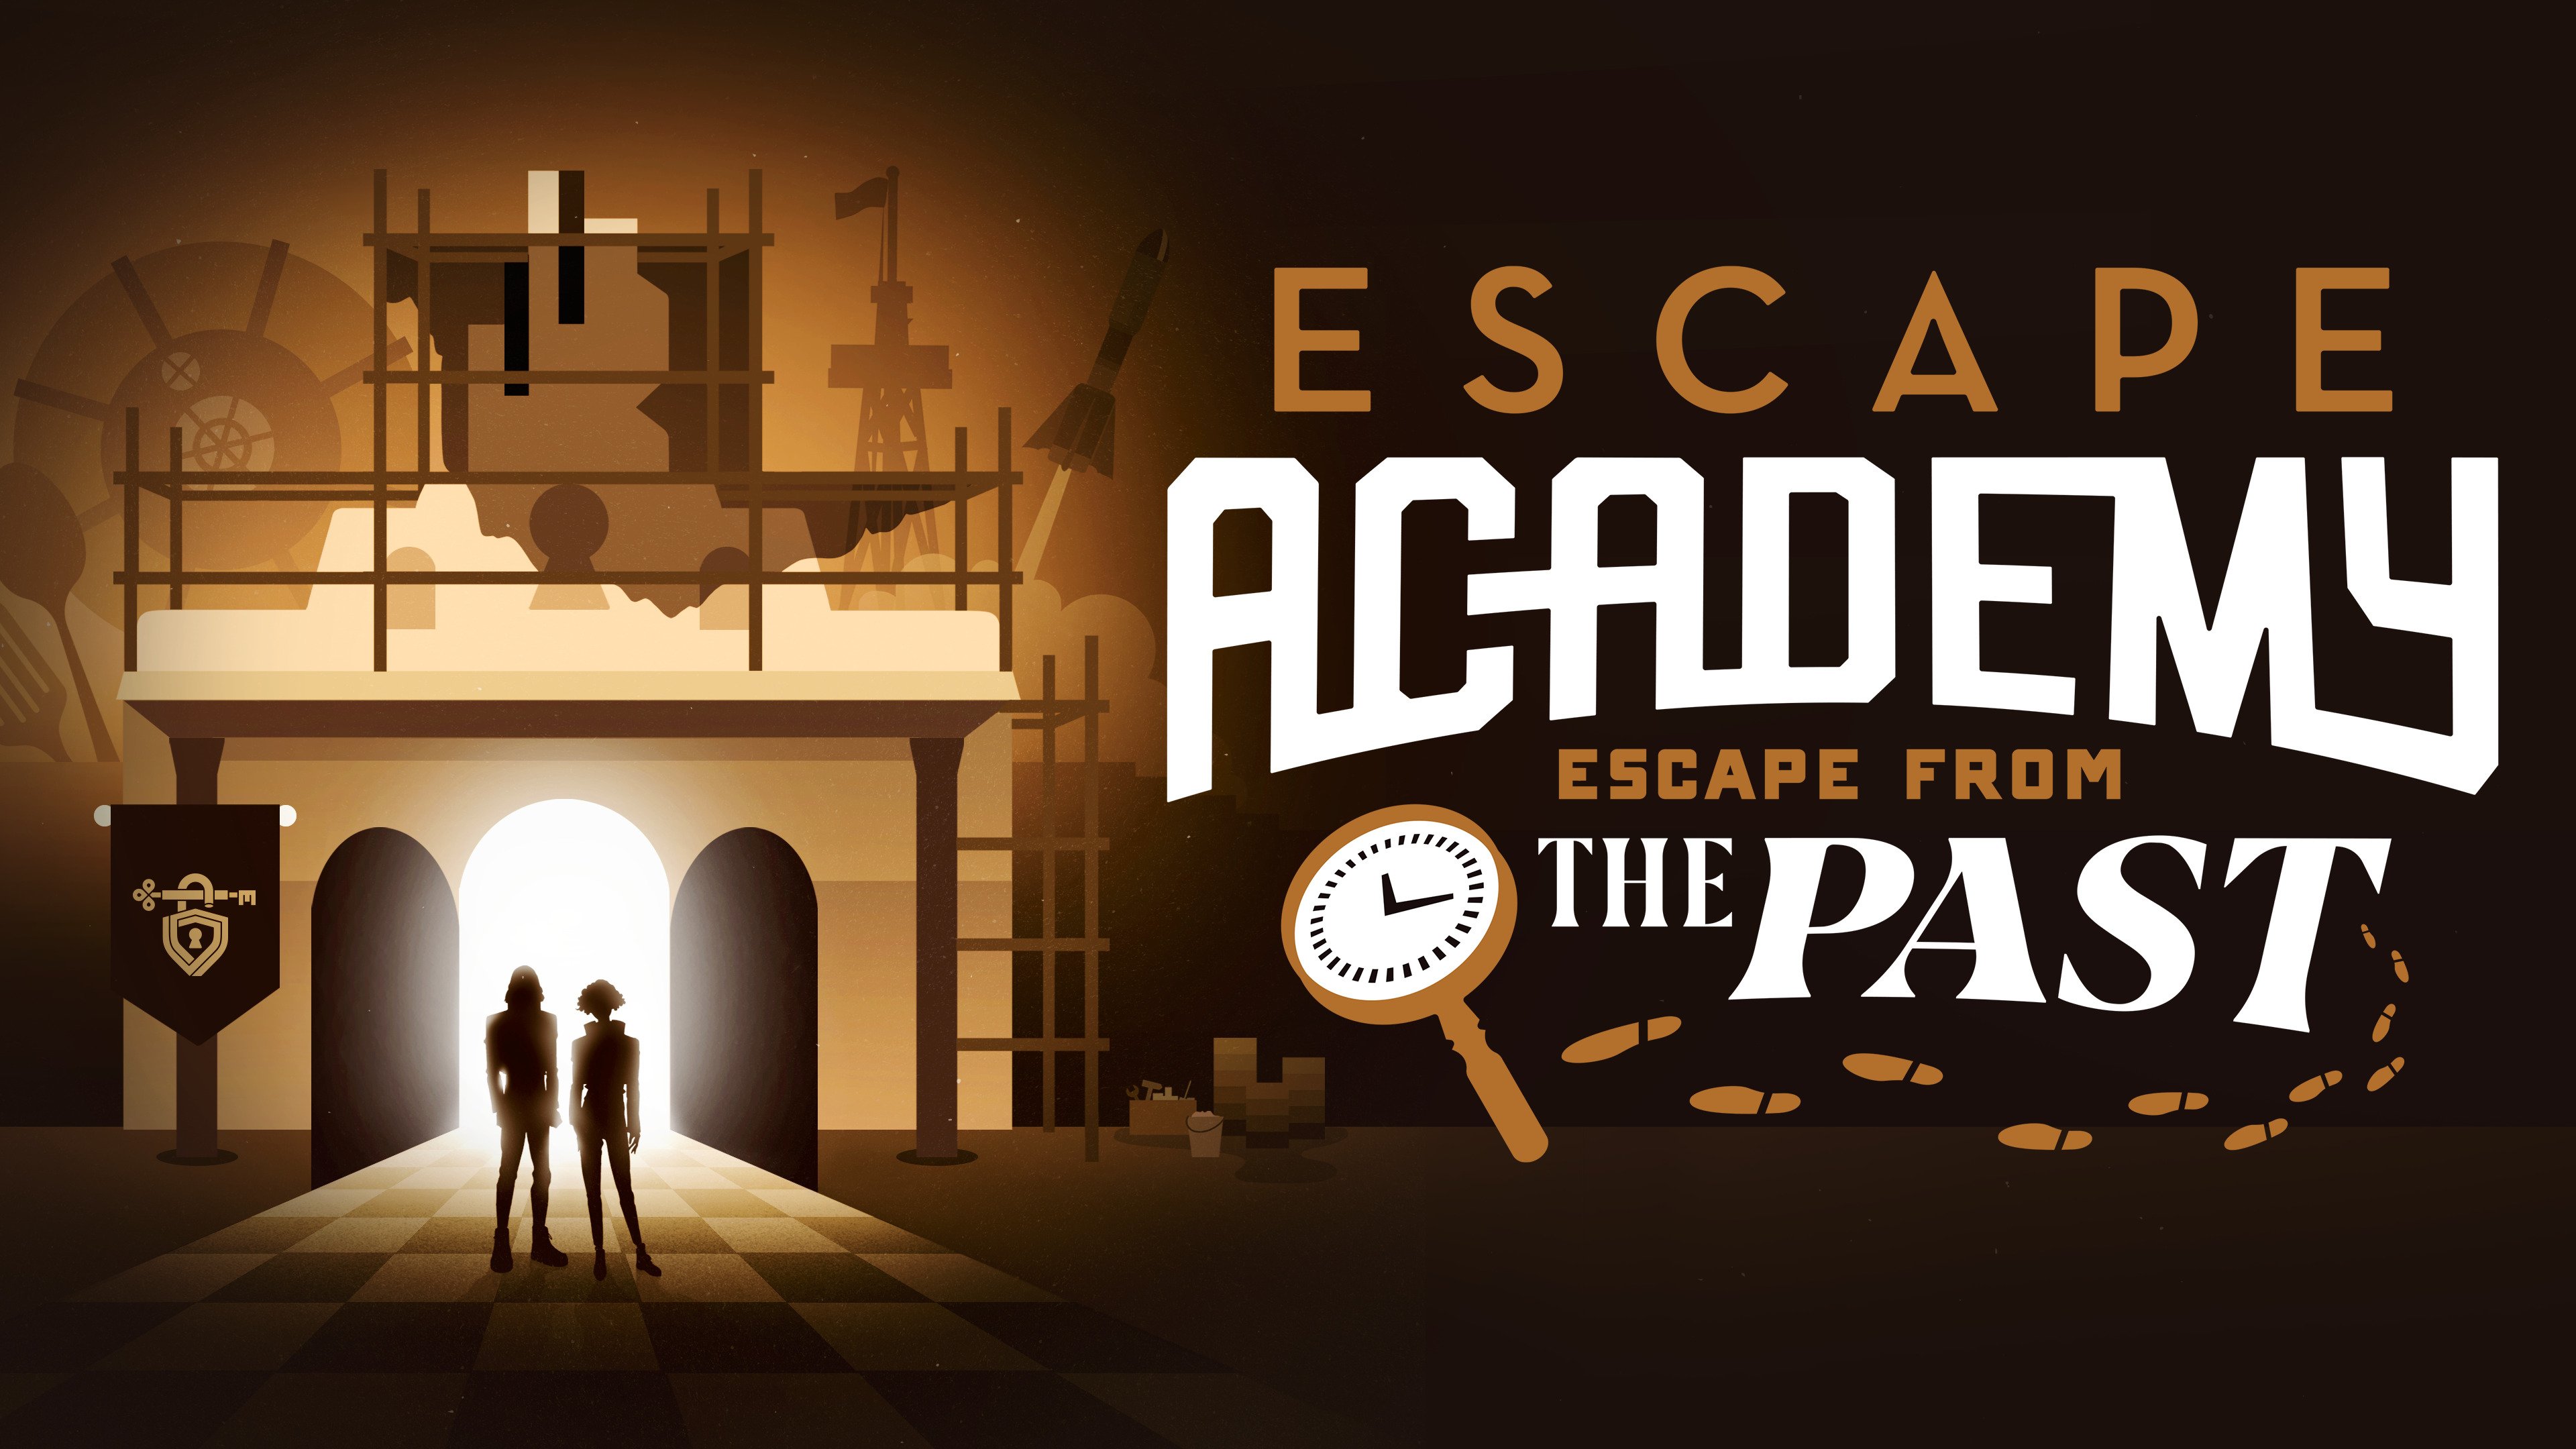 Escape Academy Deluxe Edition